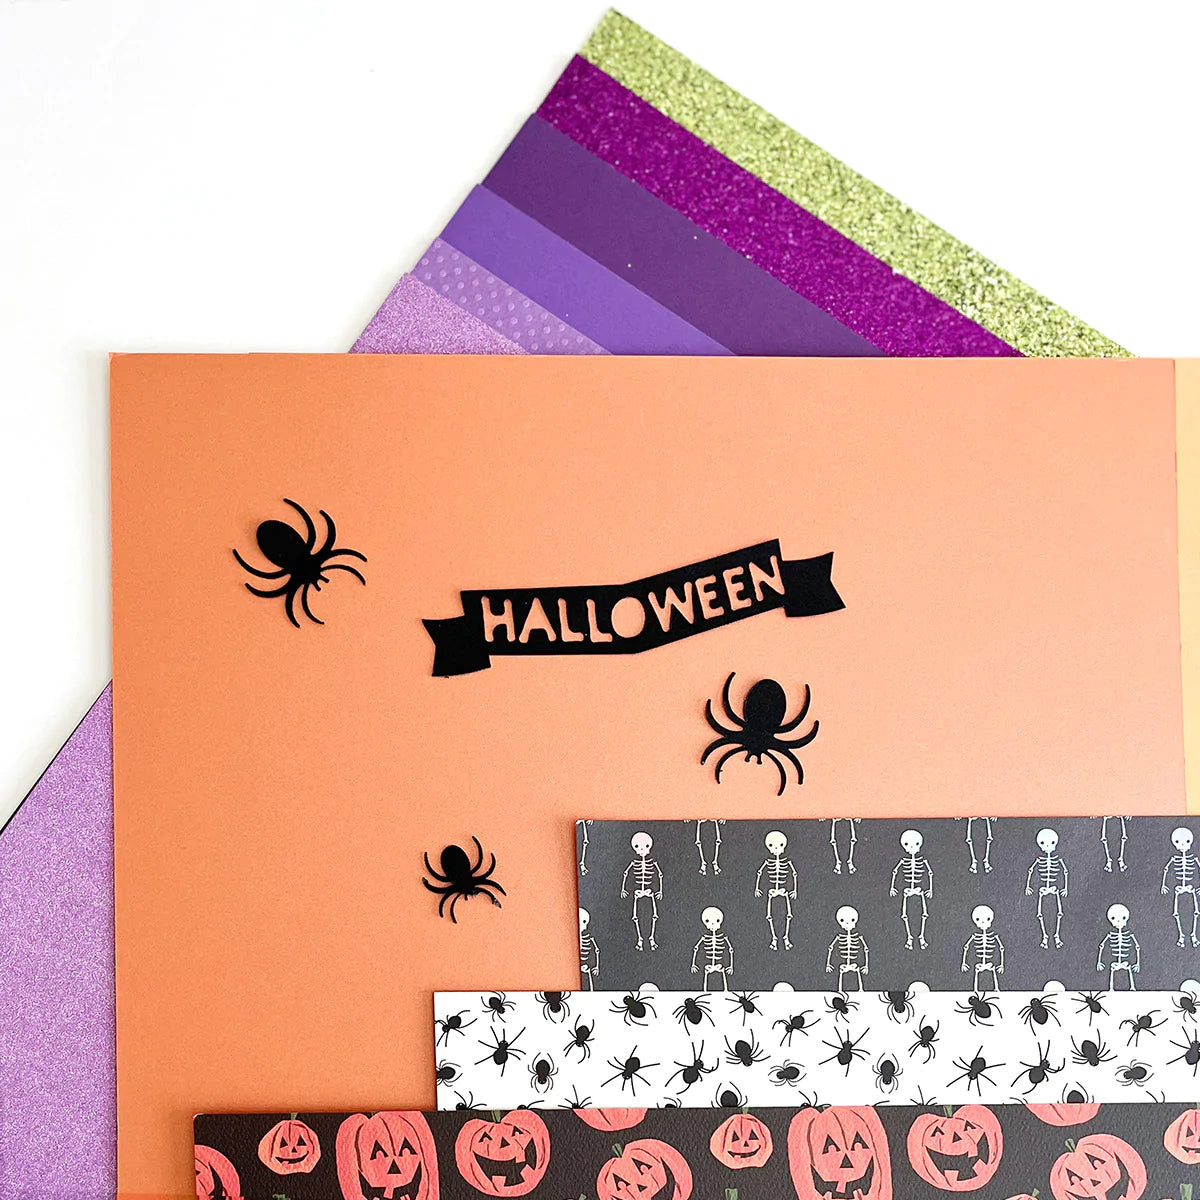  Kosiz 200 Sheets Halloween Colored Cardstock 8.5 x 11